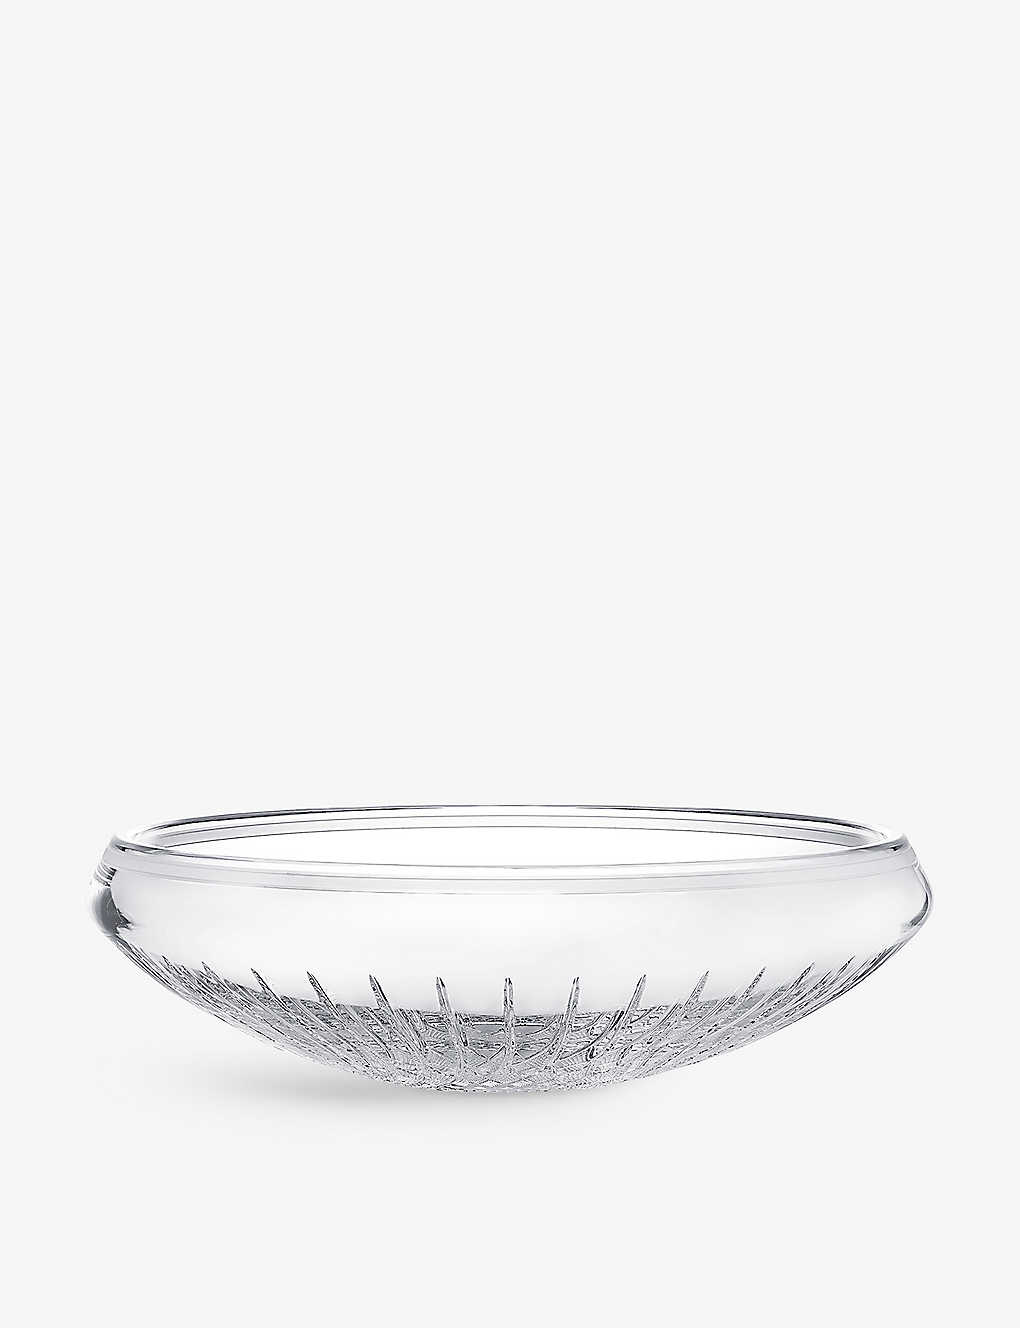 WATERFORD リズモー アーカス クリスタルボウル 35cm Lismore Arcus crystal bowl 35cm